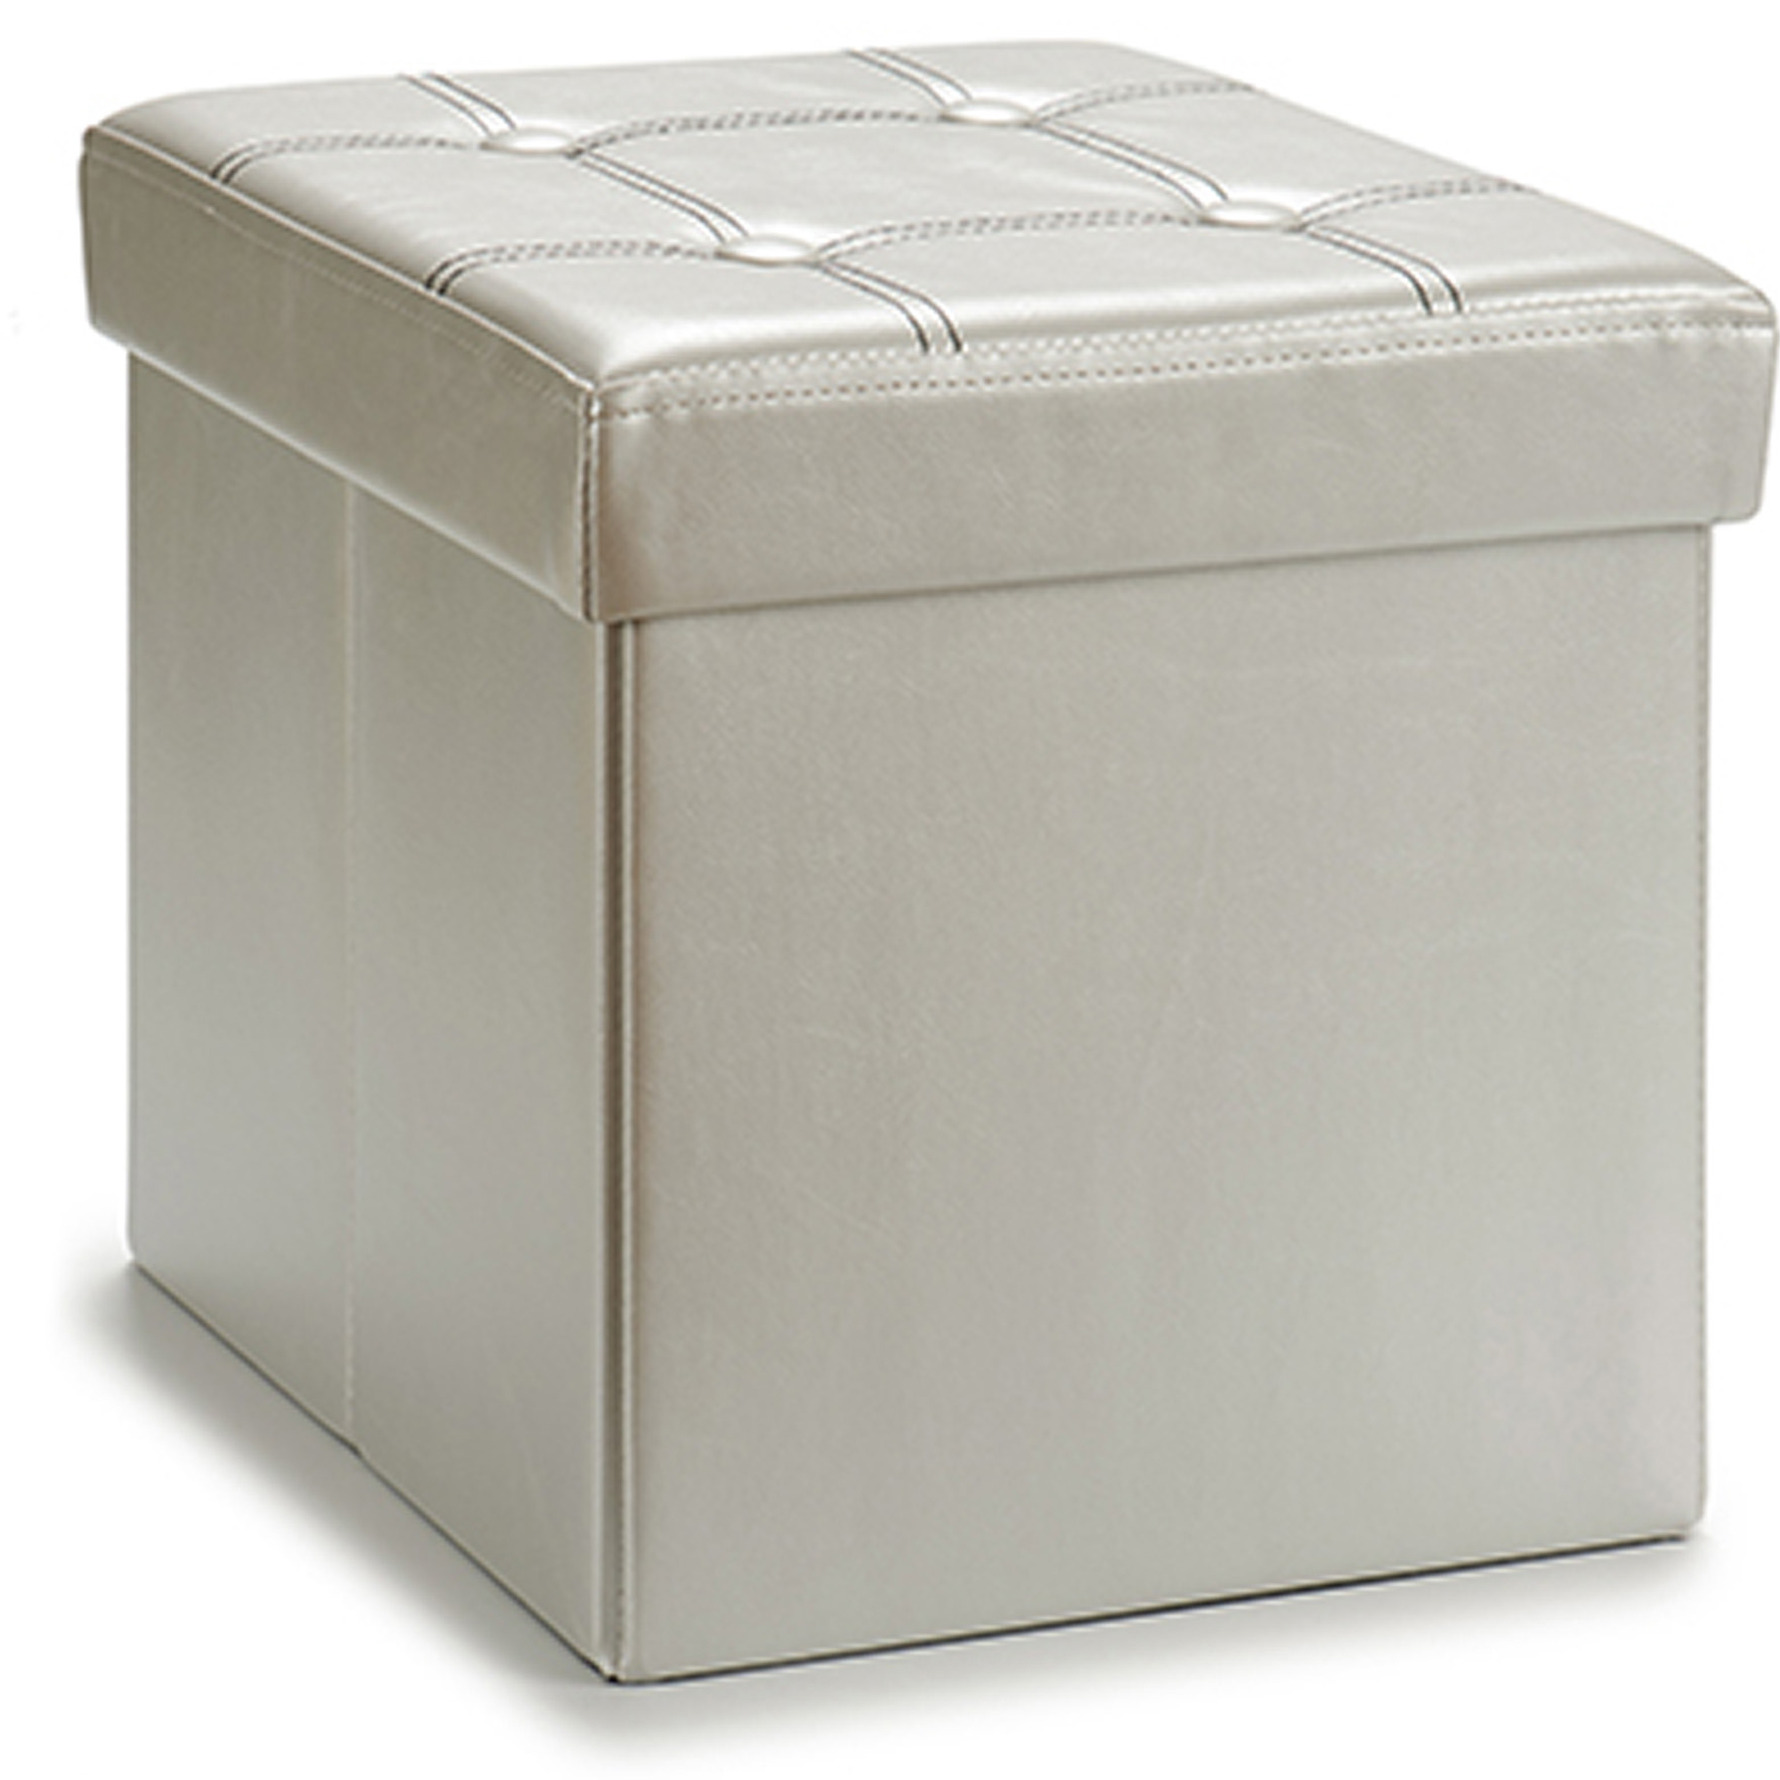 Poef Square BOX hocker opbergbox zilvergrijs polyester-mdf 31 x 31 cm opvouwbaar